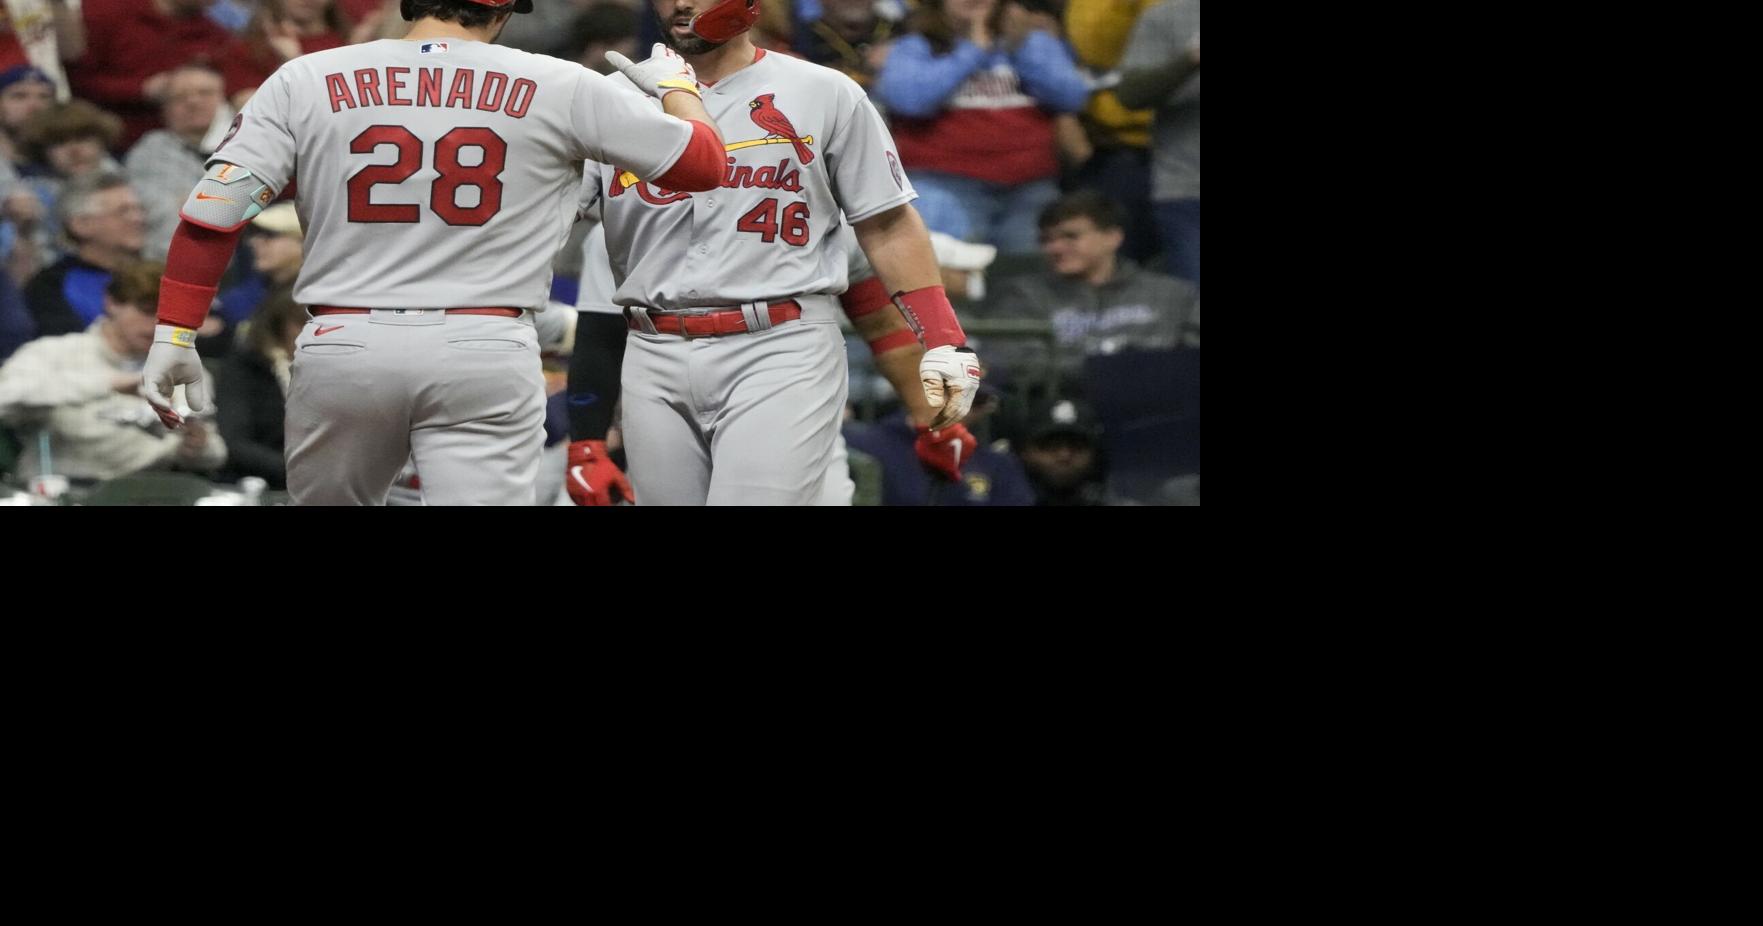 Arenado christens Jordan Montgomery's Cardinals debut with his